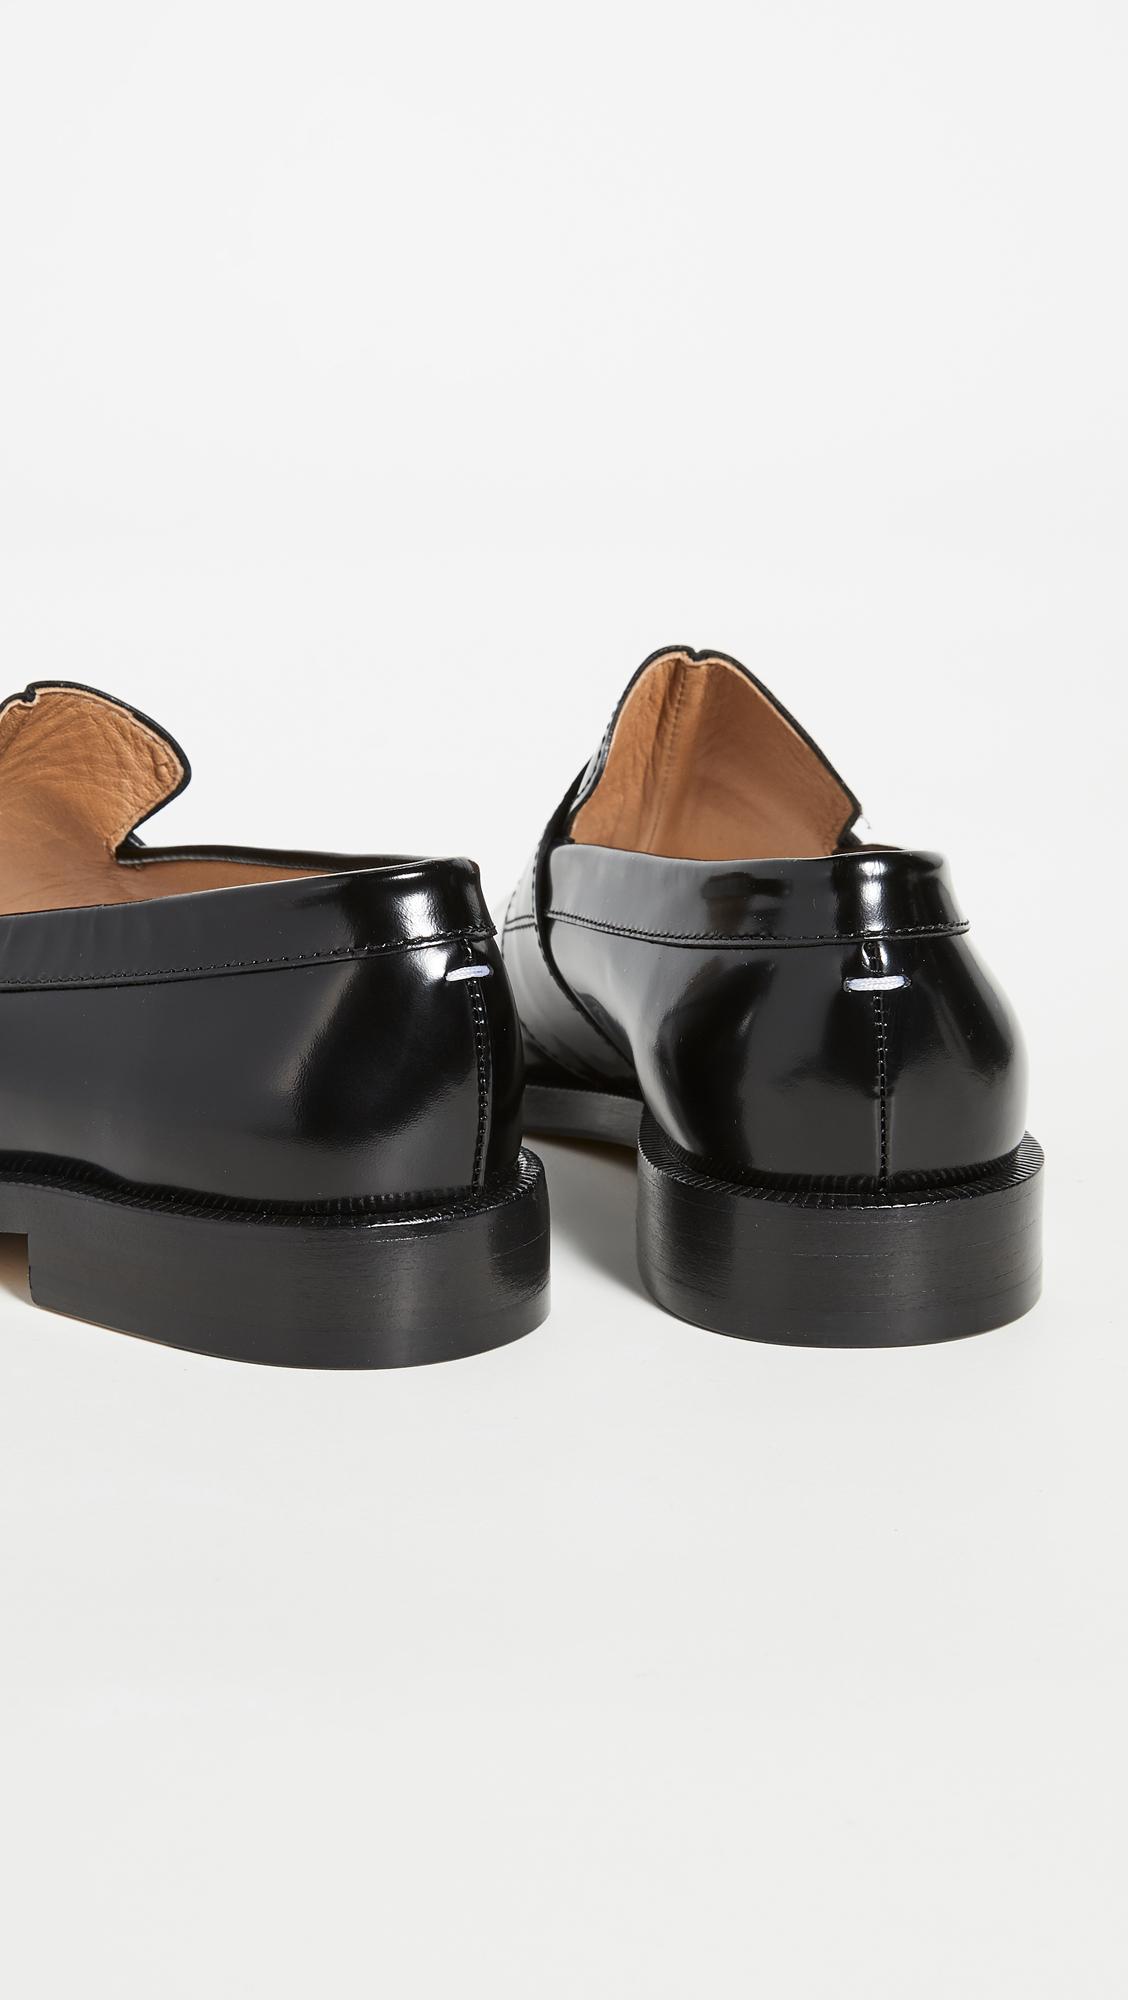 Maison Margiela Leather Tabi Loafers in Black - Lyst